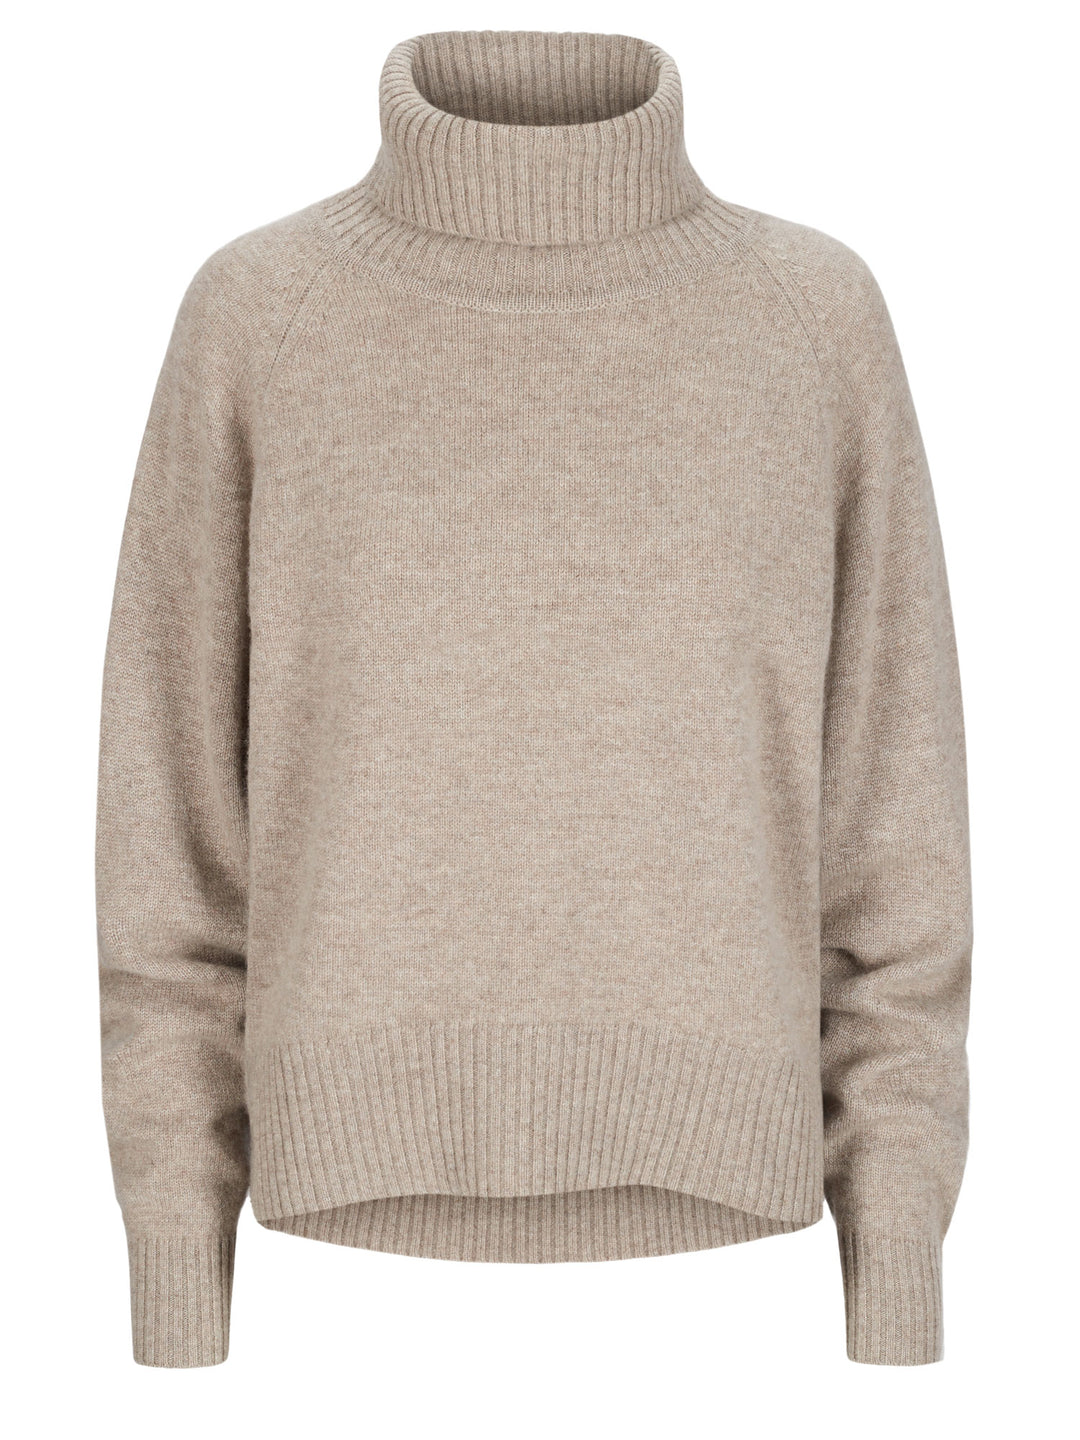 Cashmere sweater "Milano" 100% cashmere, norwegian design from Kashmina